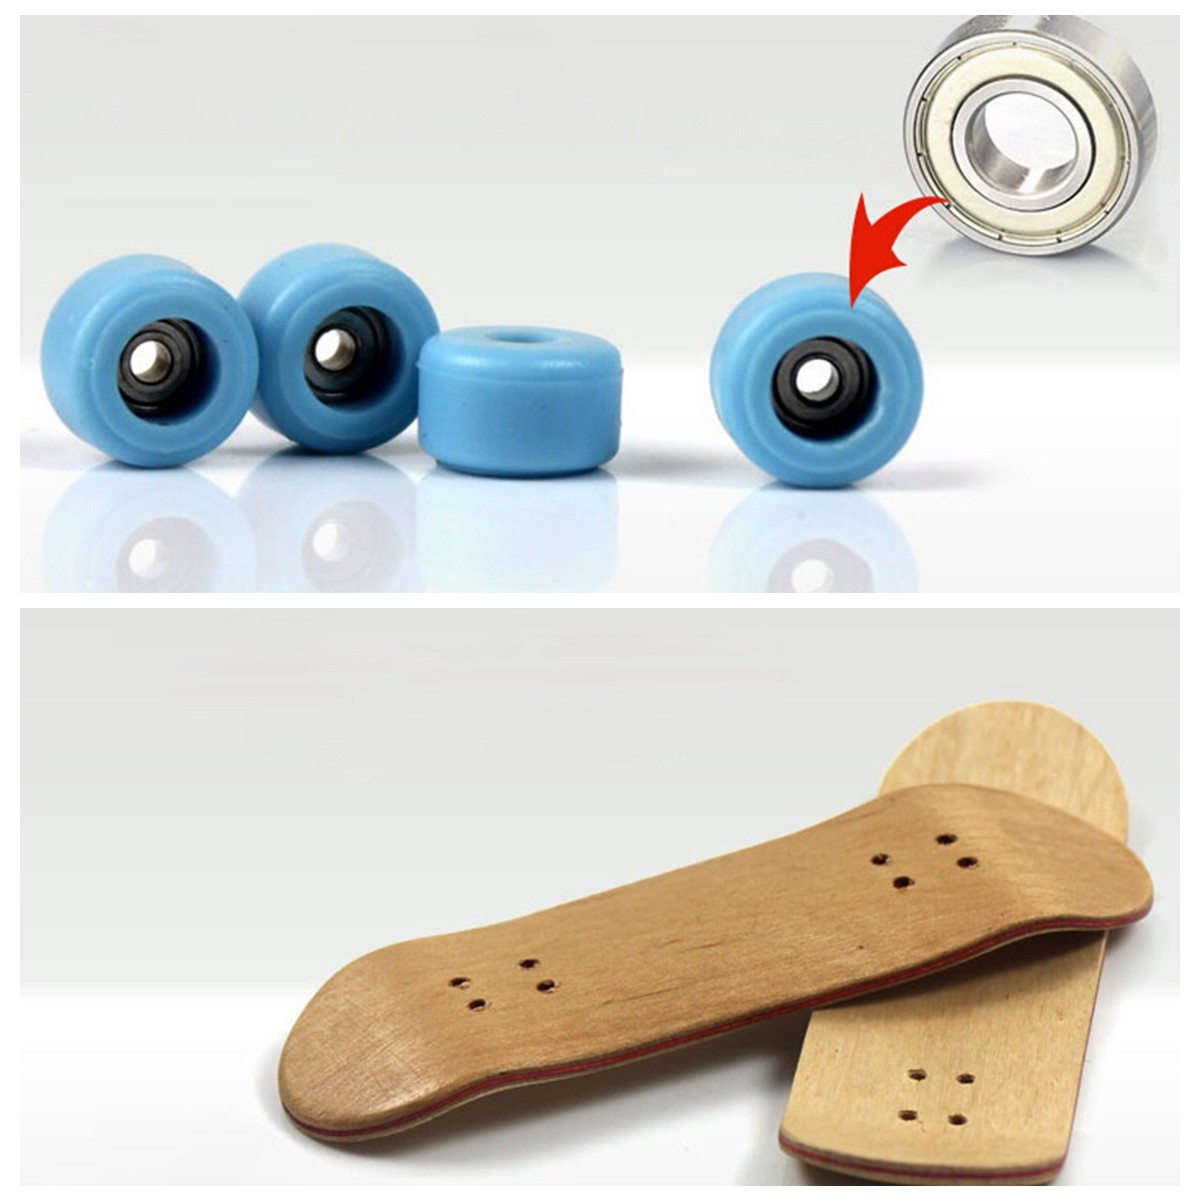 Wooden-Deck-Fingerboard-Skateboard-Maple-Wood-with-Bearings-Kids-Gift-Decorations-1276220